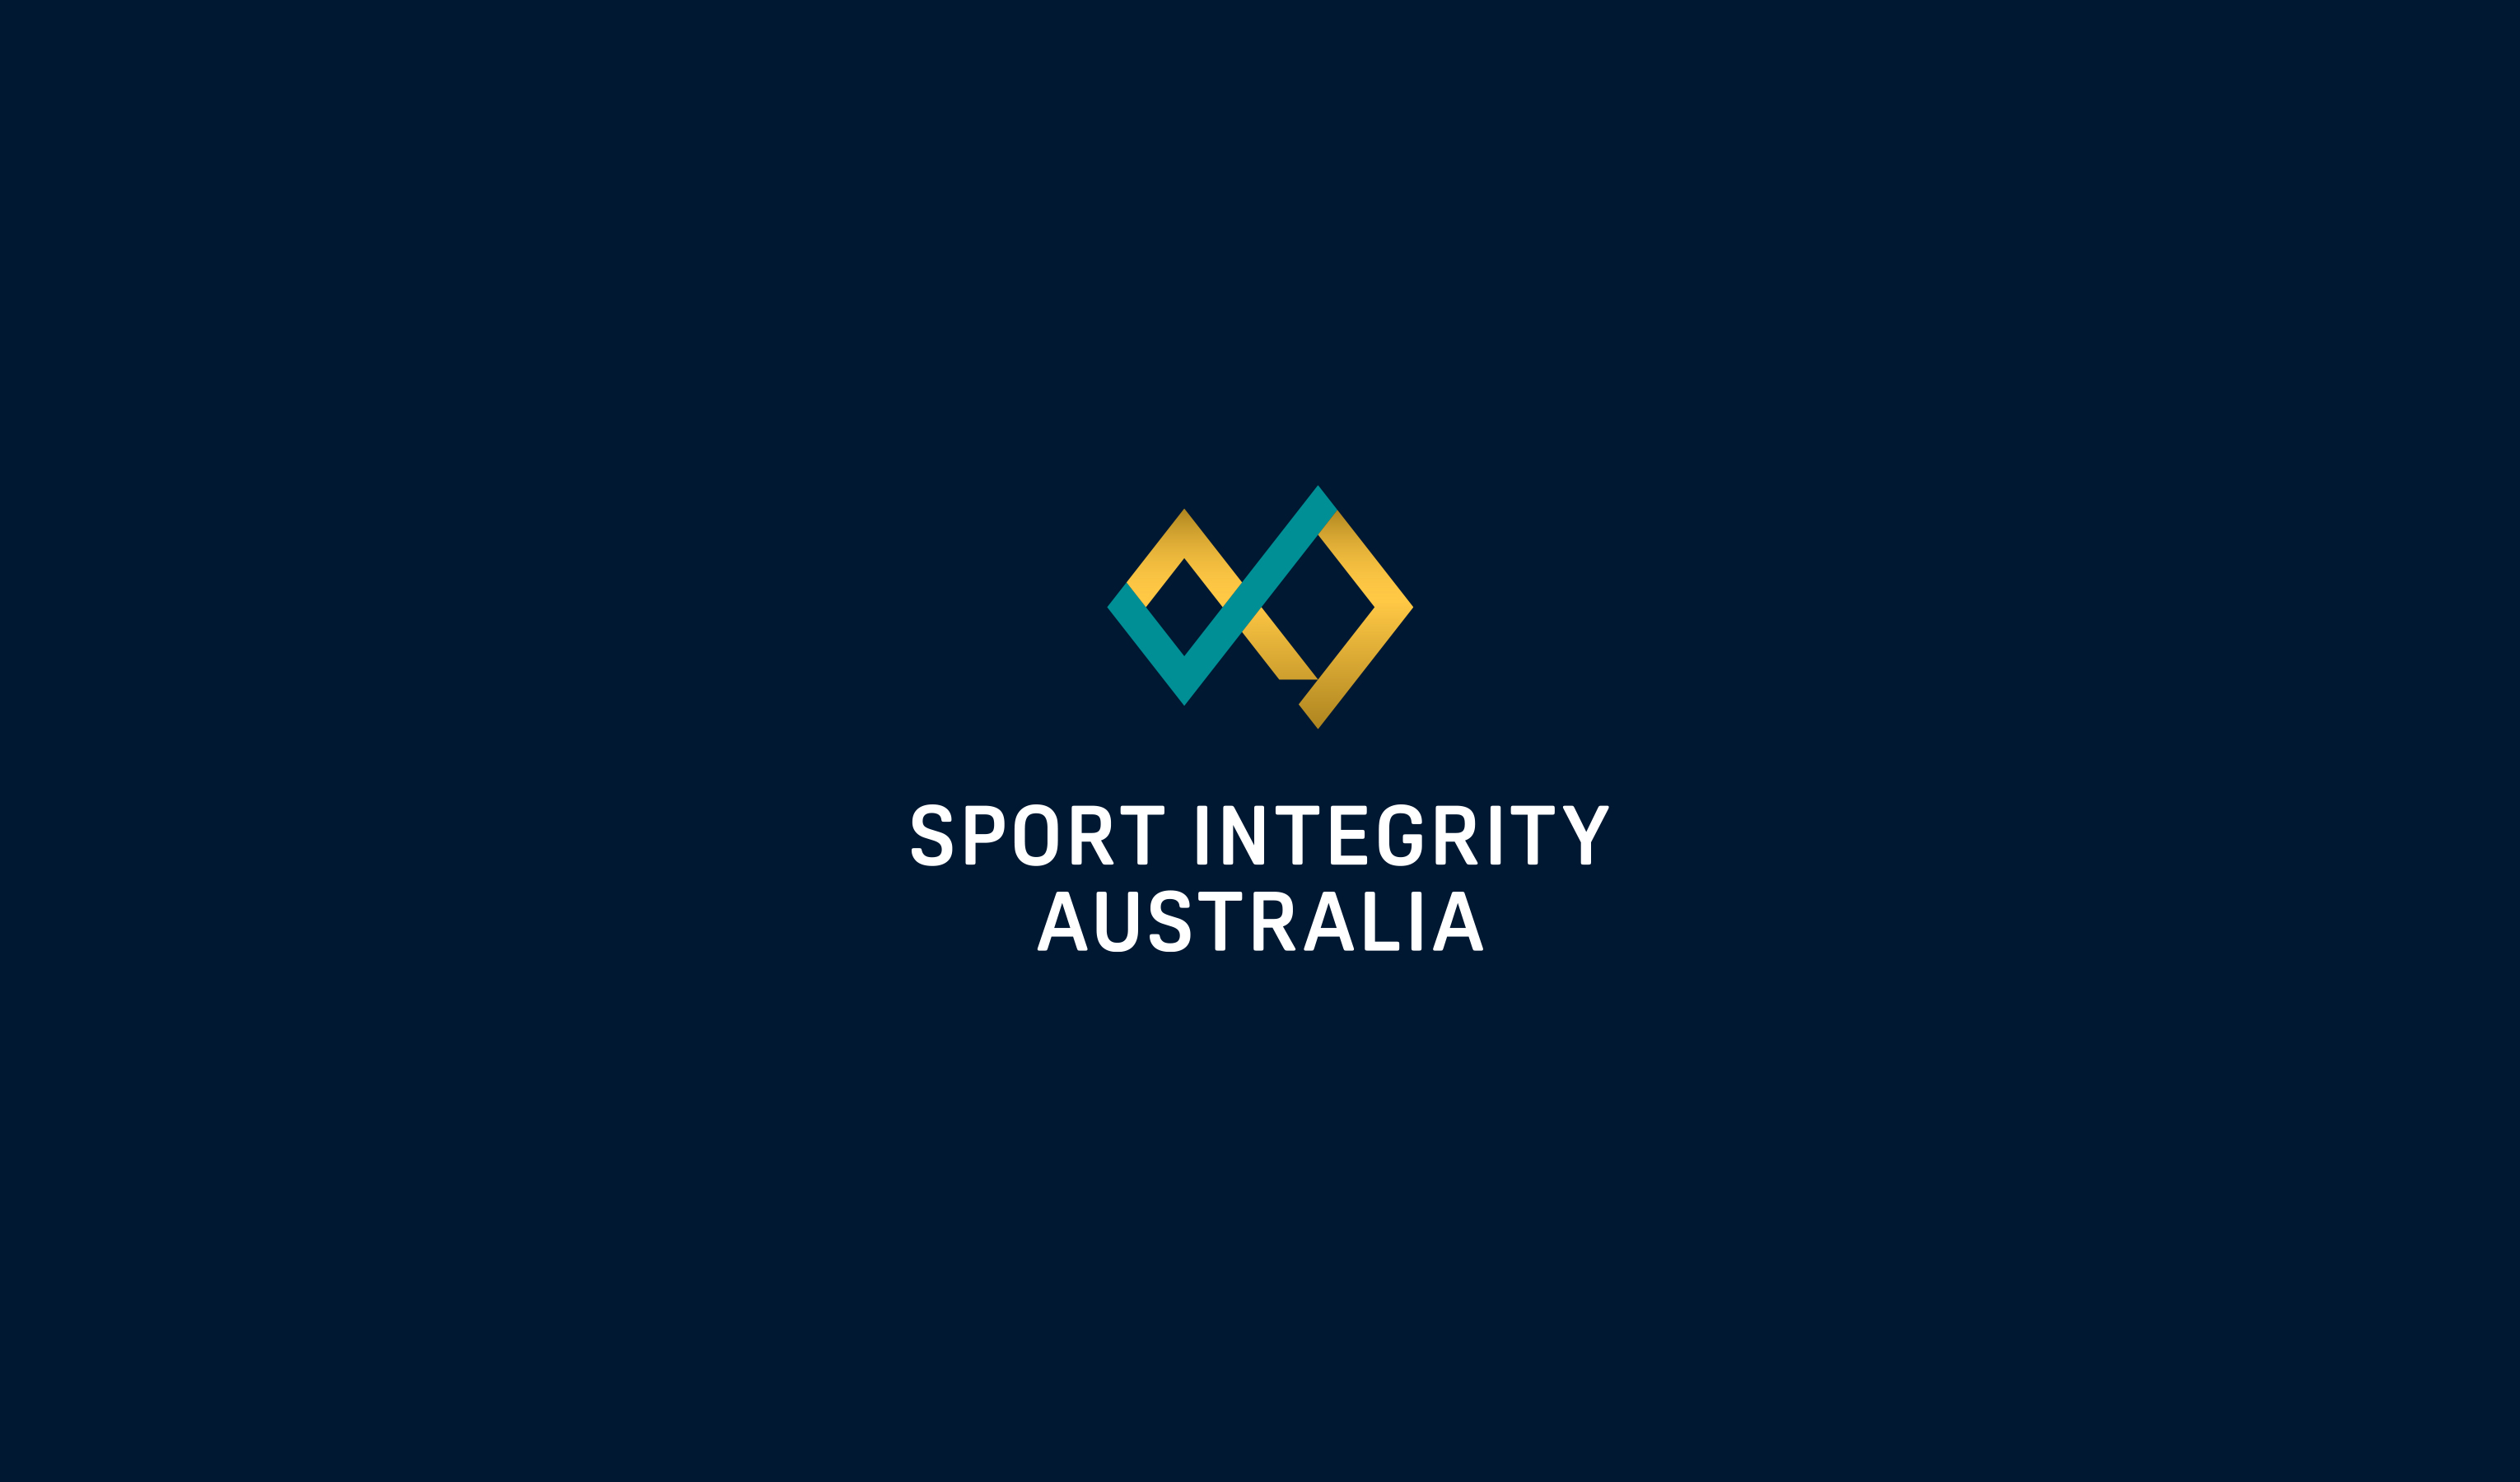 sport integrity australia logo with name